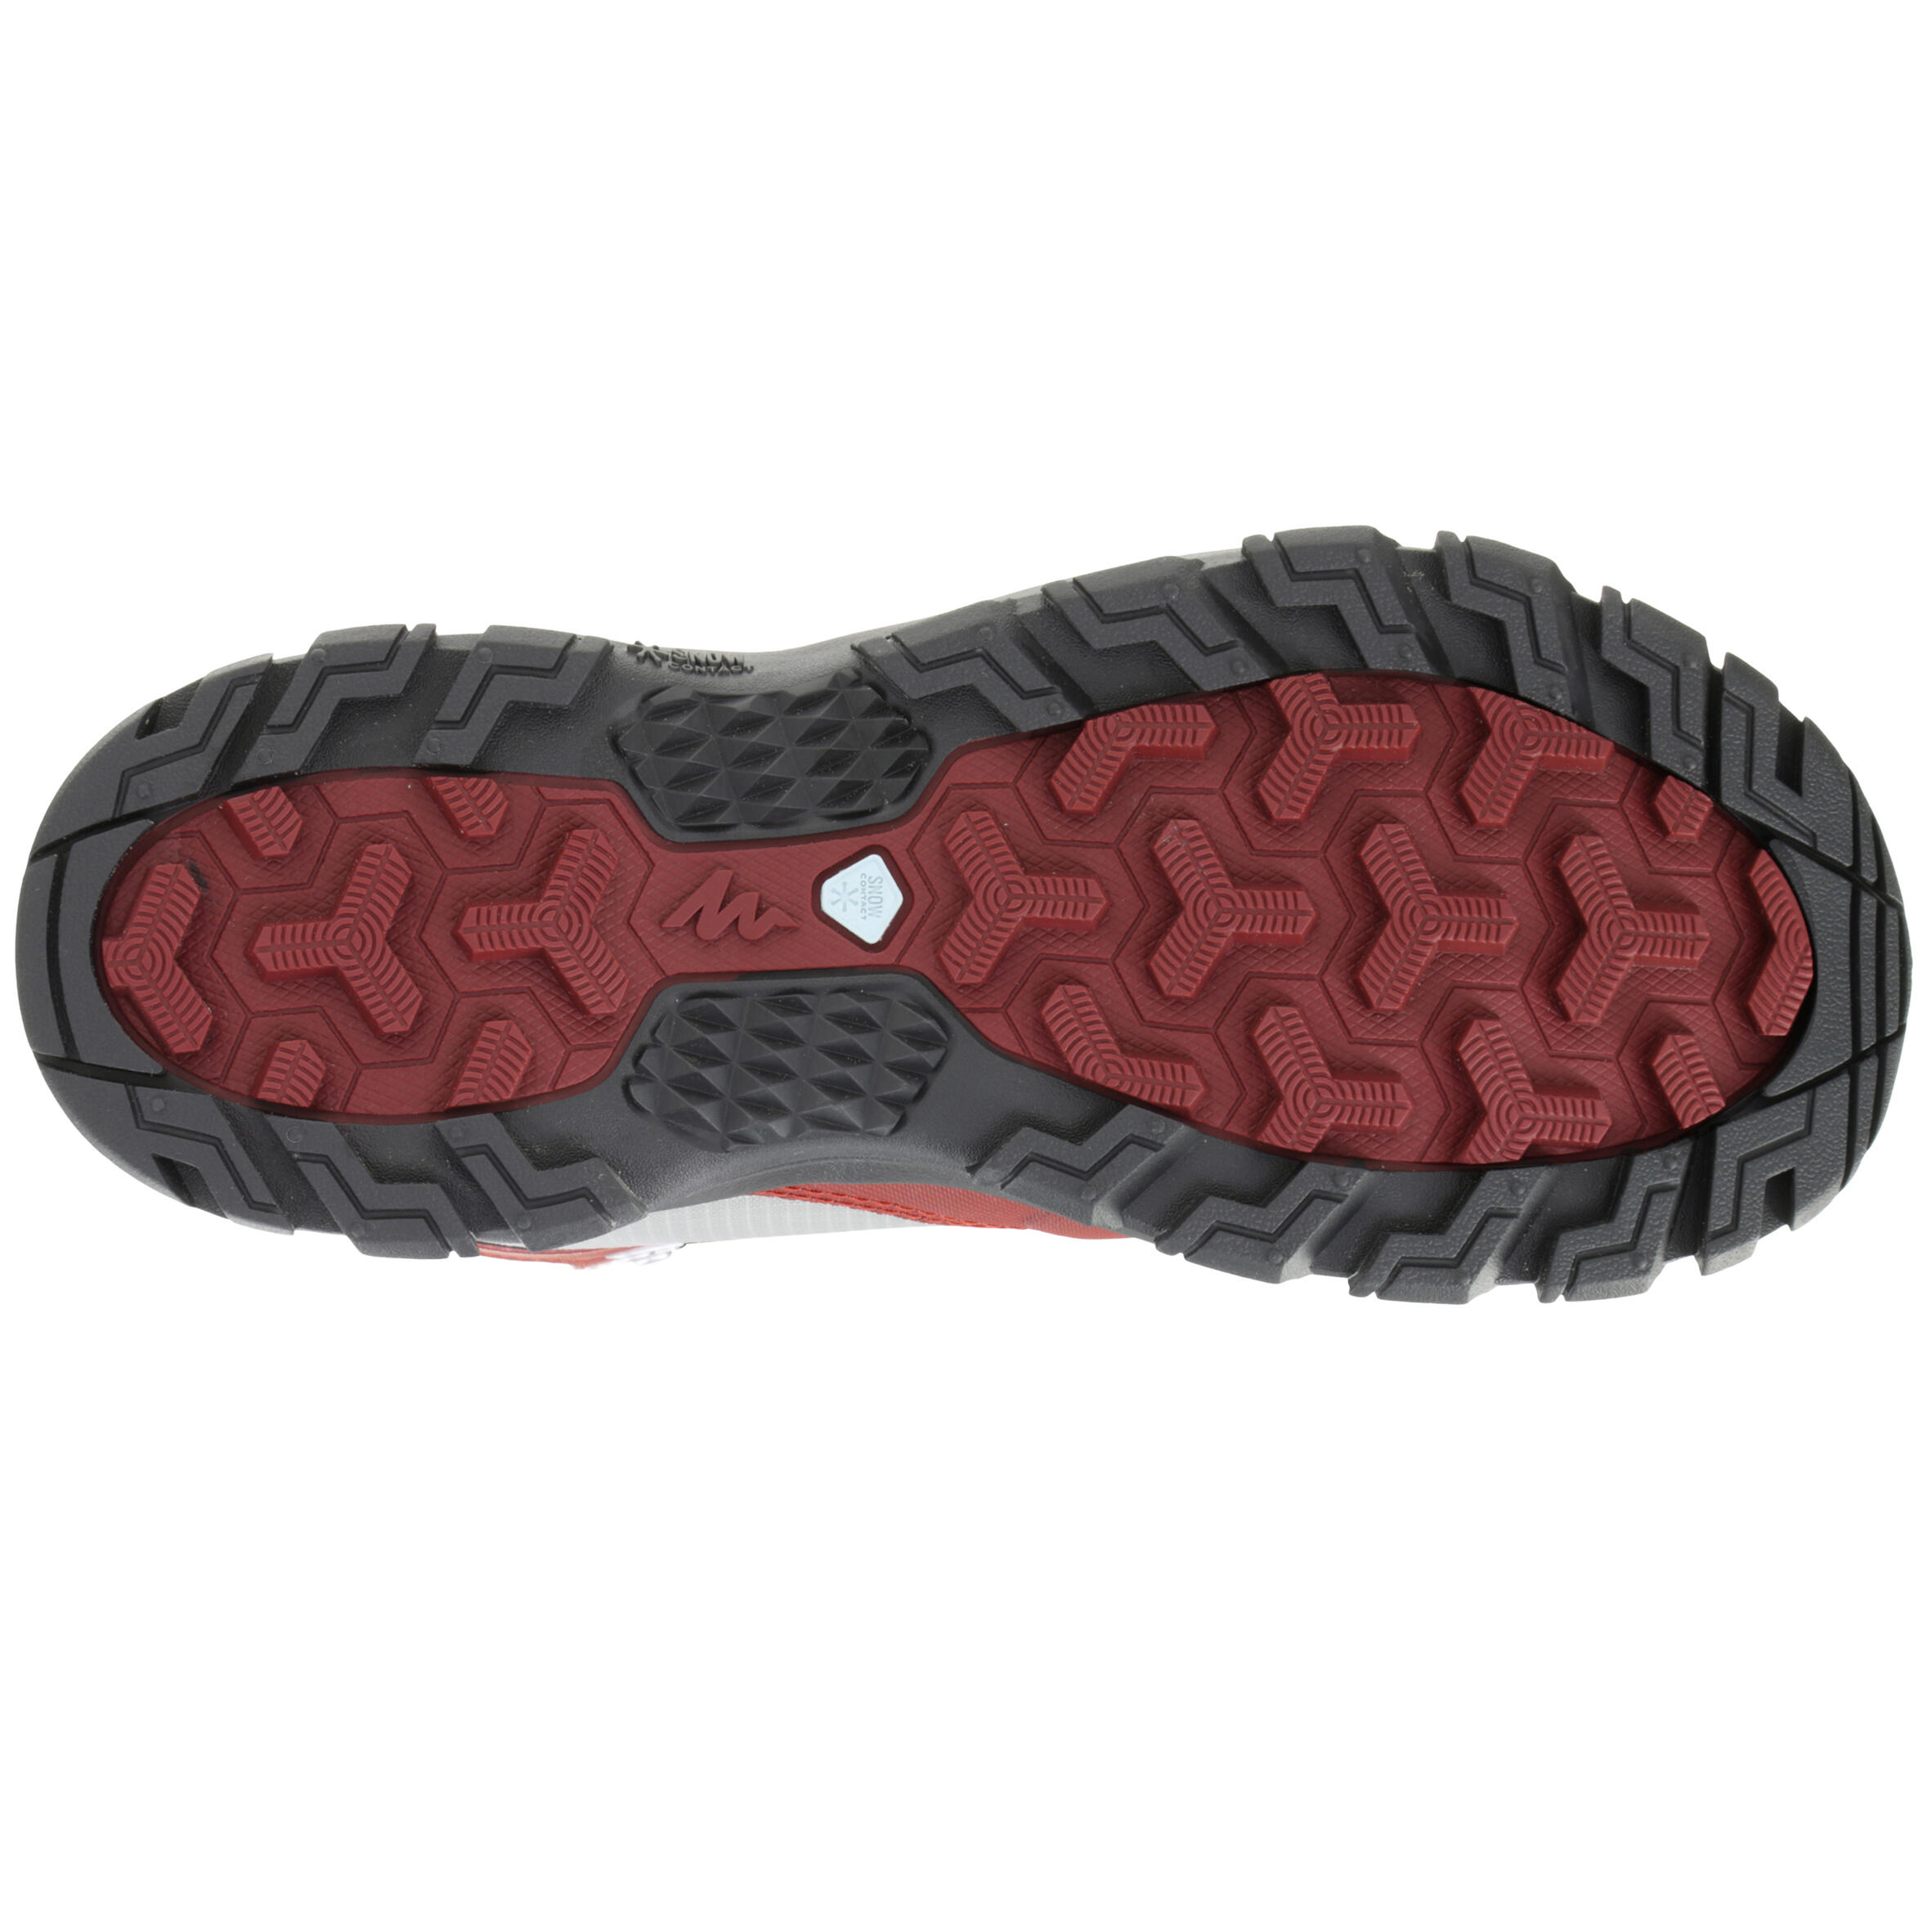 Forclaz 500 Waterproof Women'S Hiking Boots - Burgundy 13/16